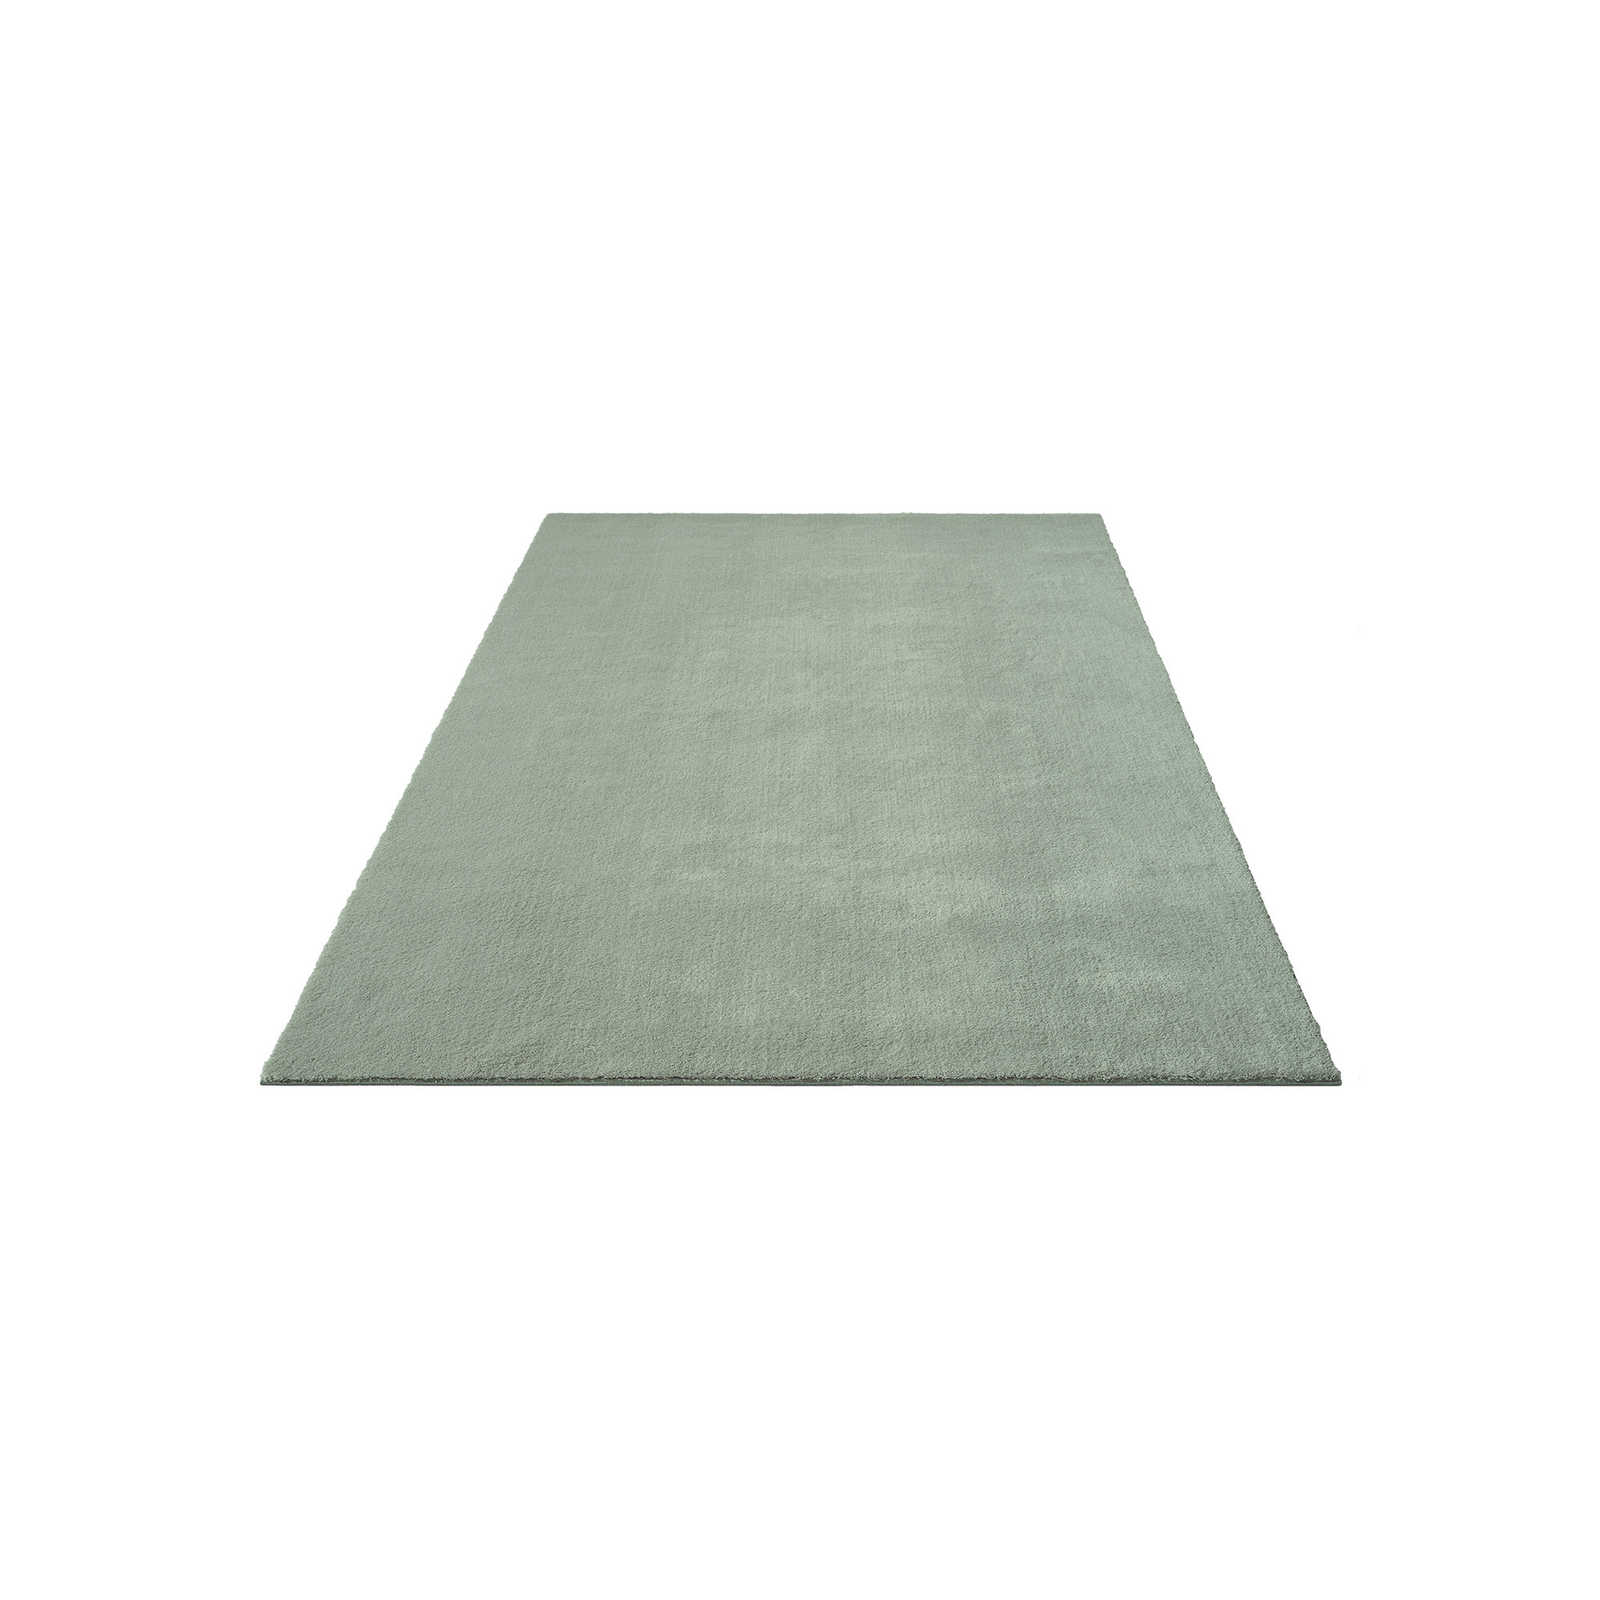 Soft pile carpet in green - 230 x 160 cm
